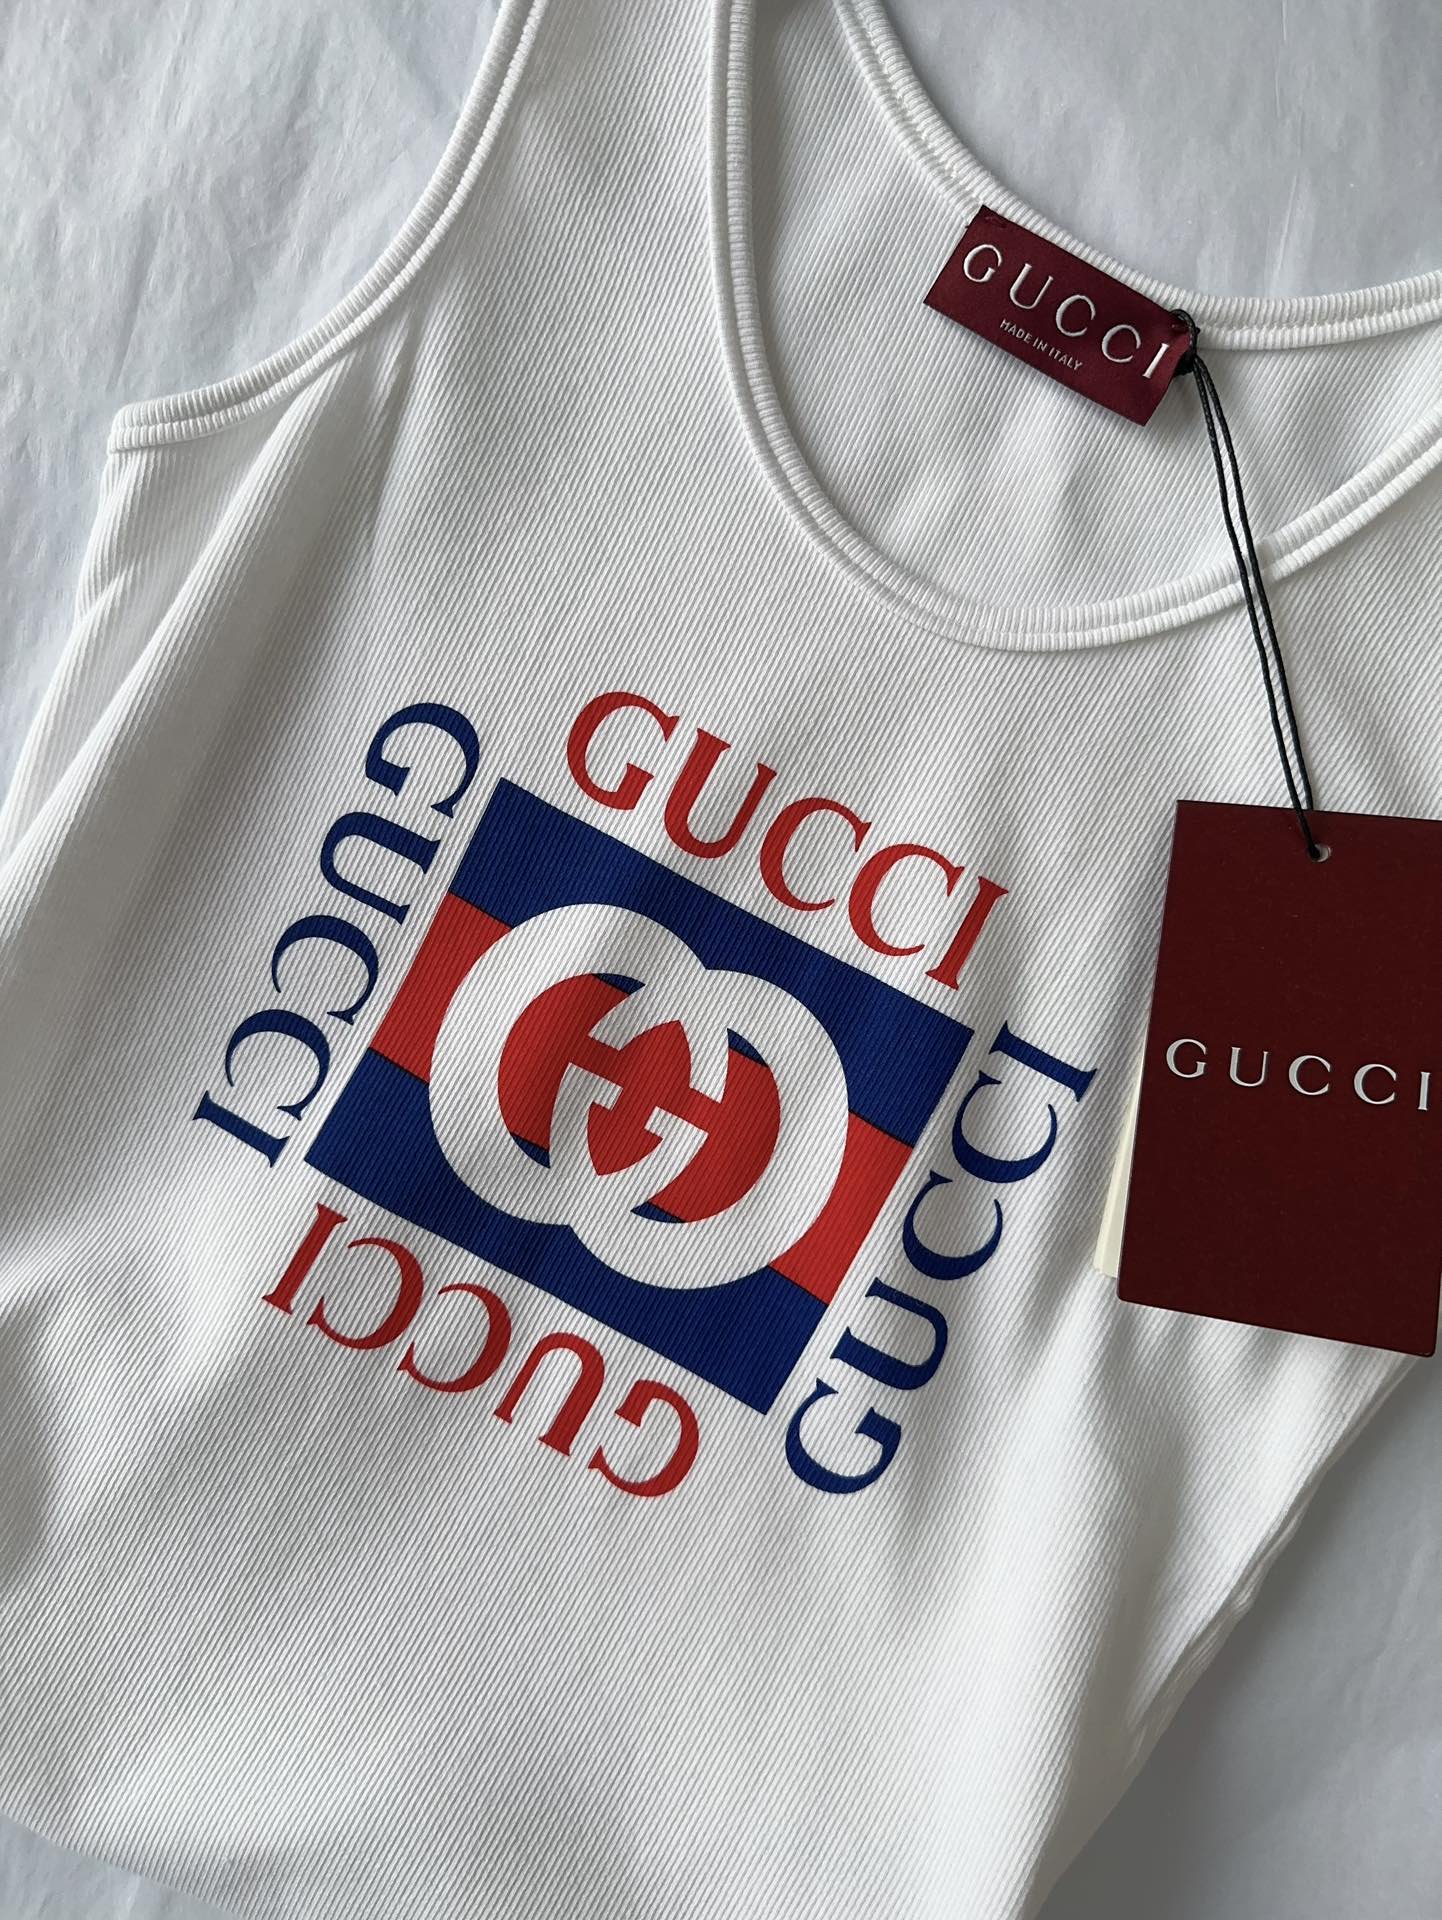 Gucc*24夏季新款印花字母针织背心出货胸前印花字母图案经典且高级感受夏日“趣味色彩搭配”真的想穿着它